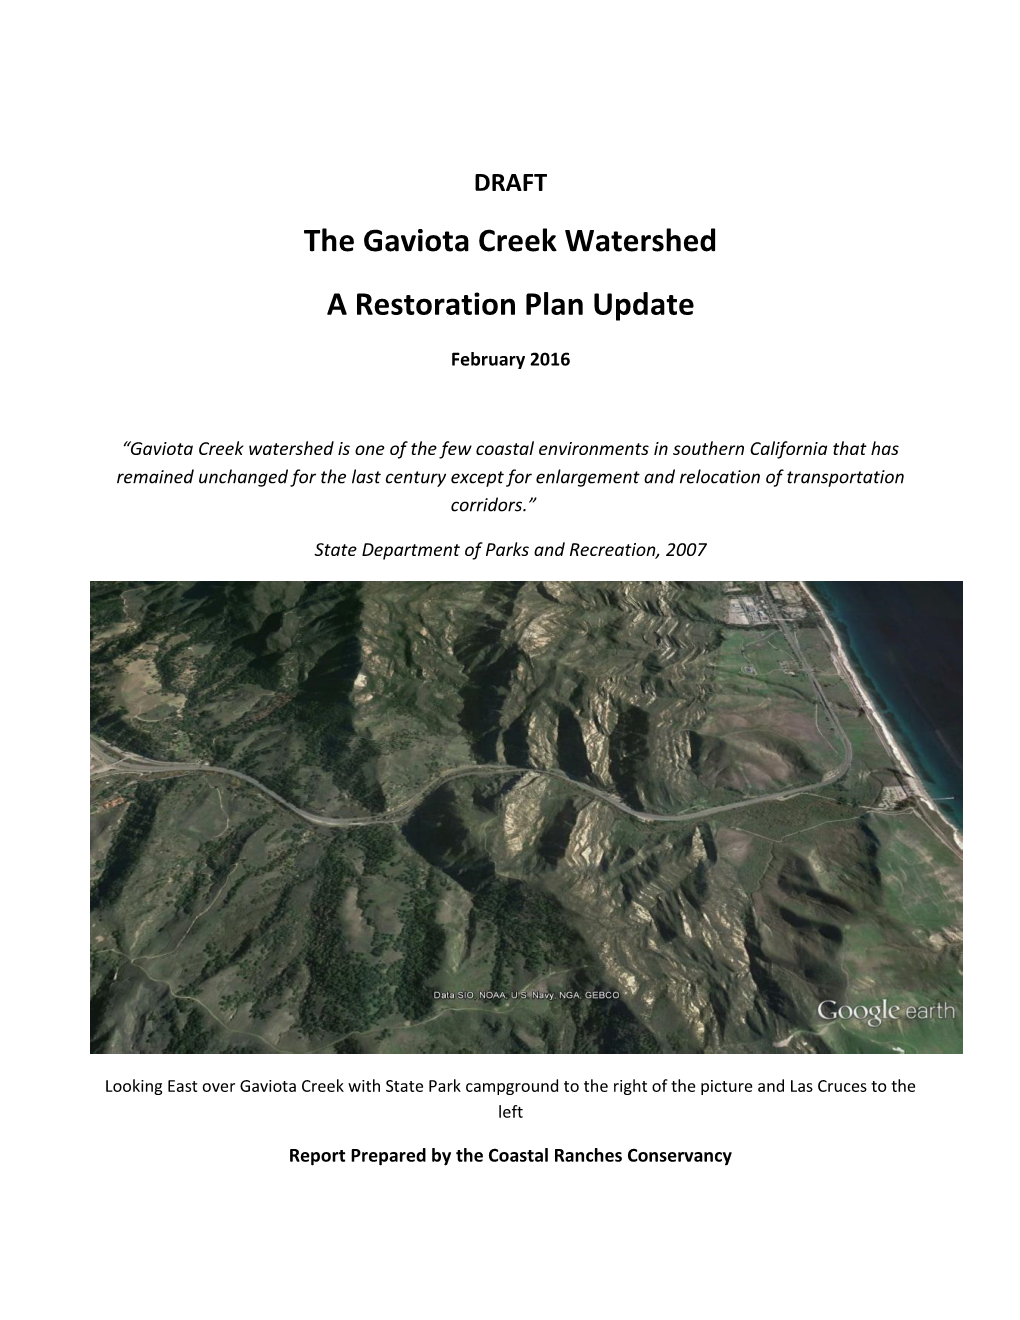 The Gaviota Creek Watershed a Restoration Plan Update